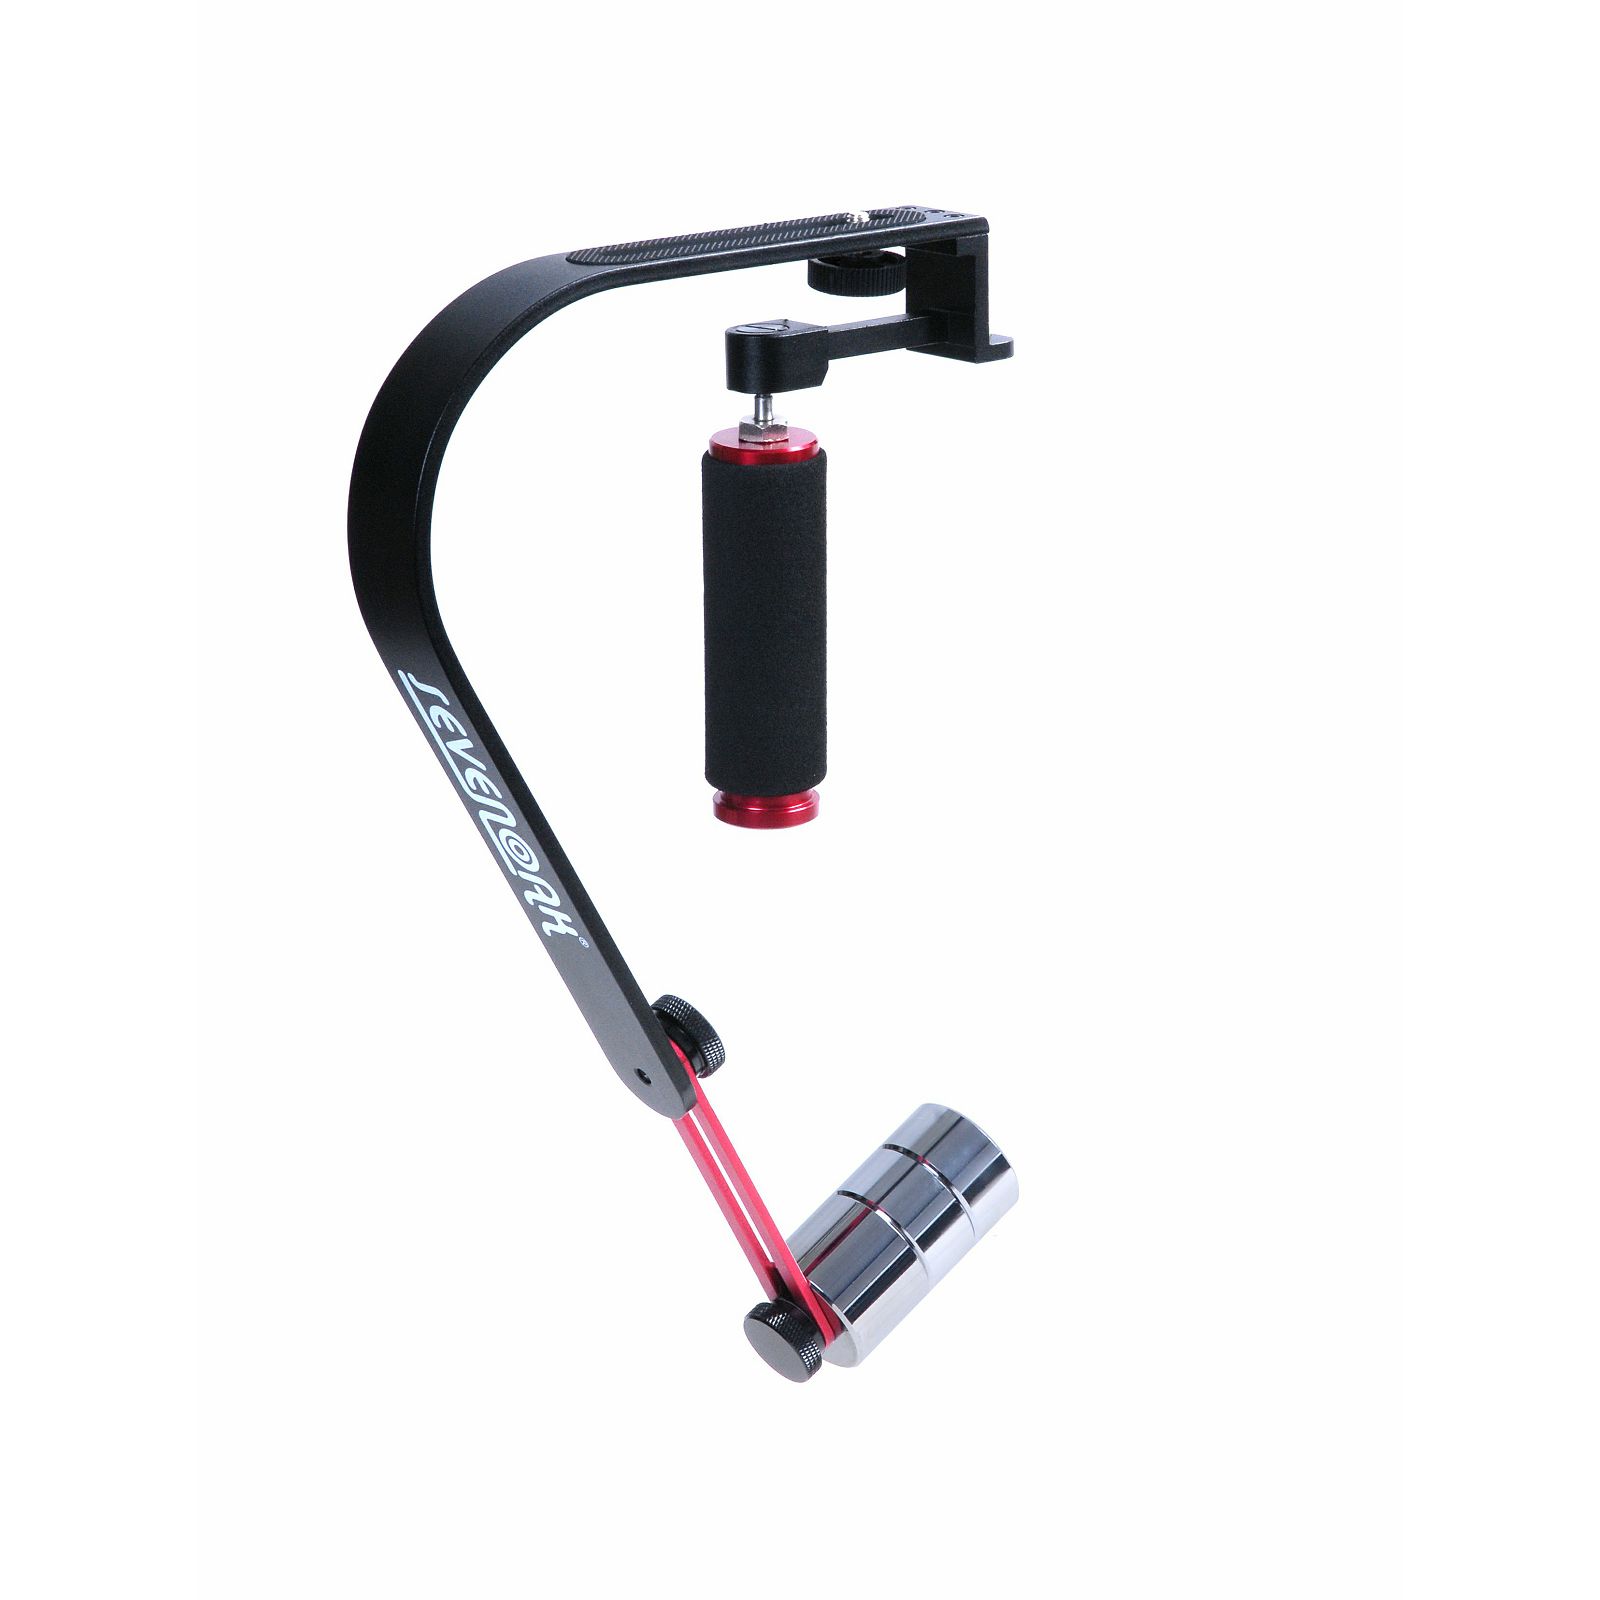 Sevenoak Camera Stabilizer SK-W02 SteadyCam stabilizator DSLR fotoaparata i kamere do 1kg za video snimanje s utegom